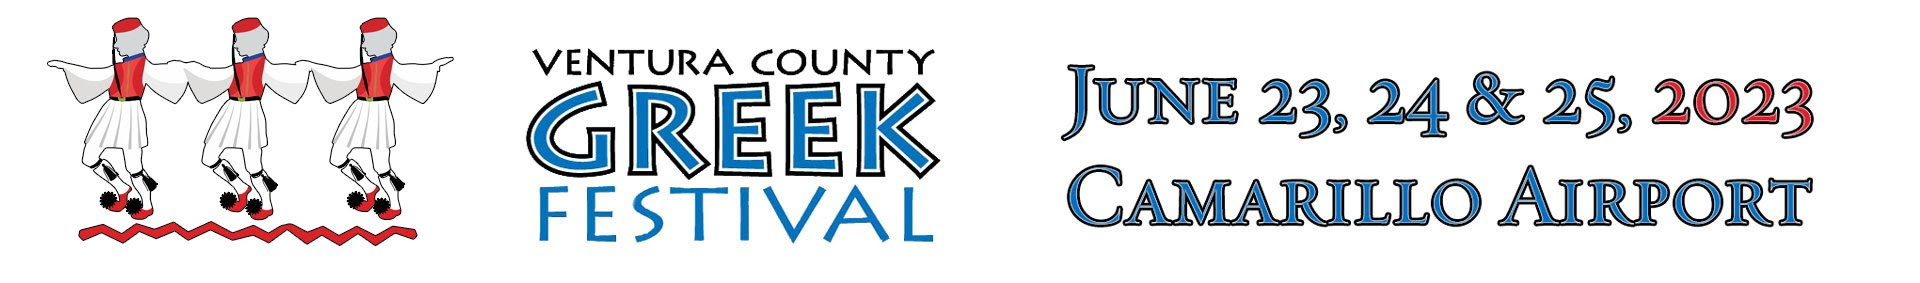 Ventura County Greek Festival 